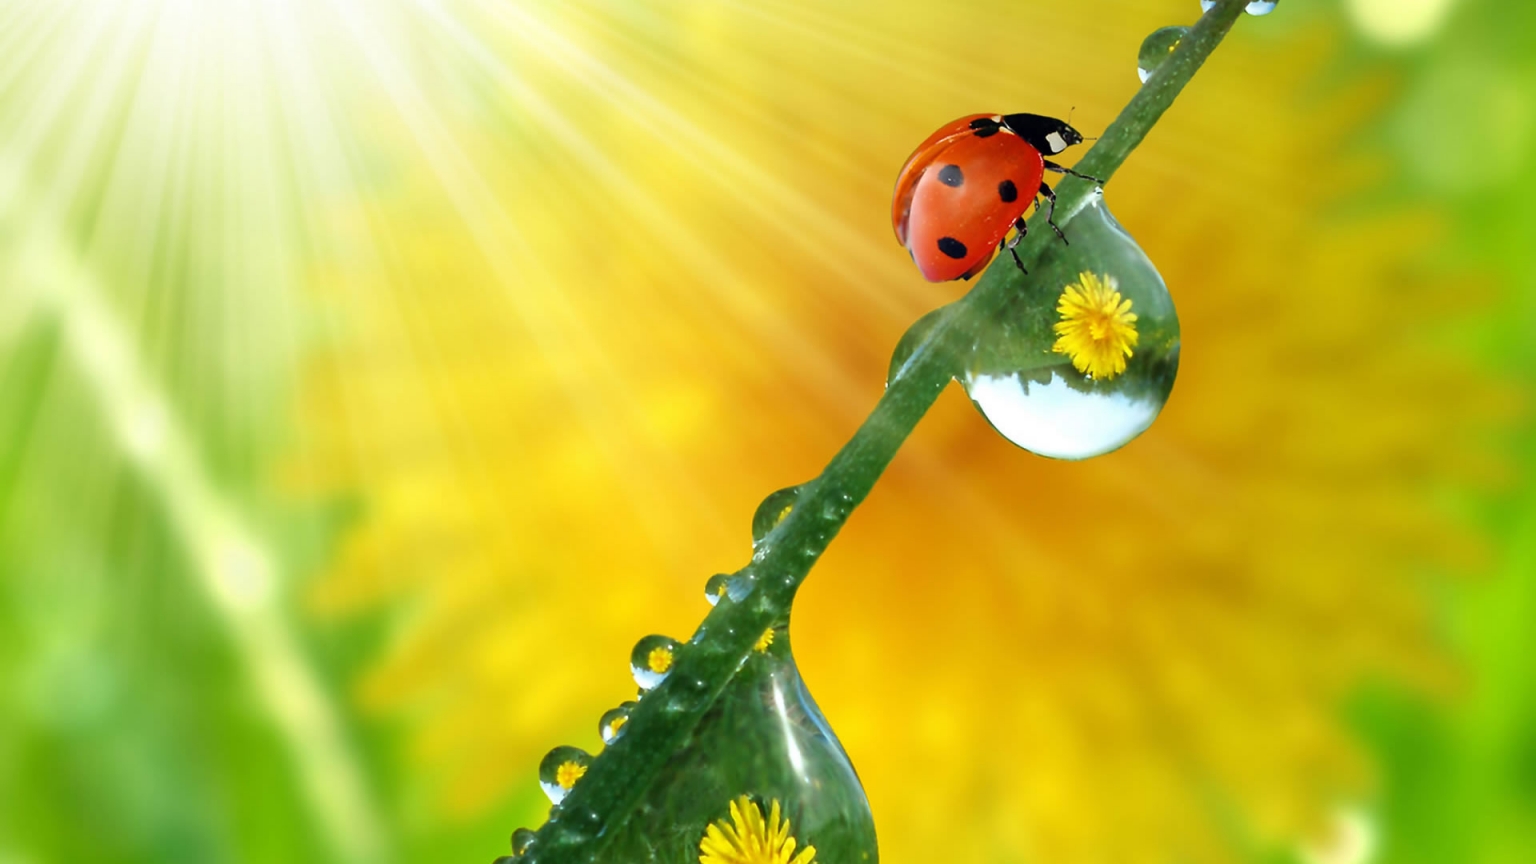 Beautiful ladybug for 1536 x 864 HDTV resolution